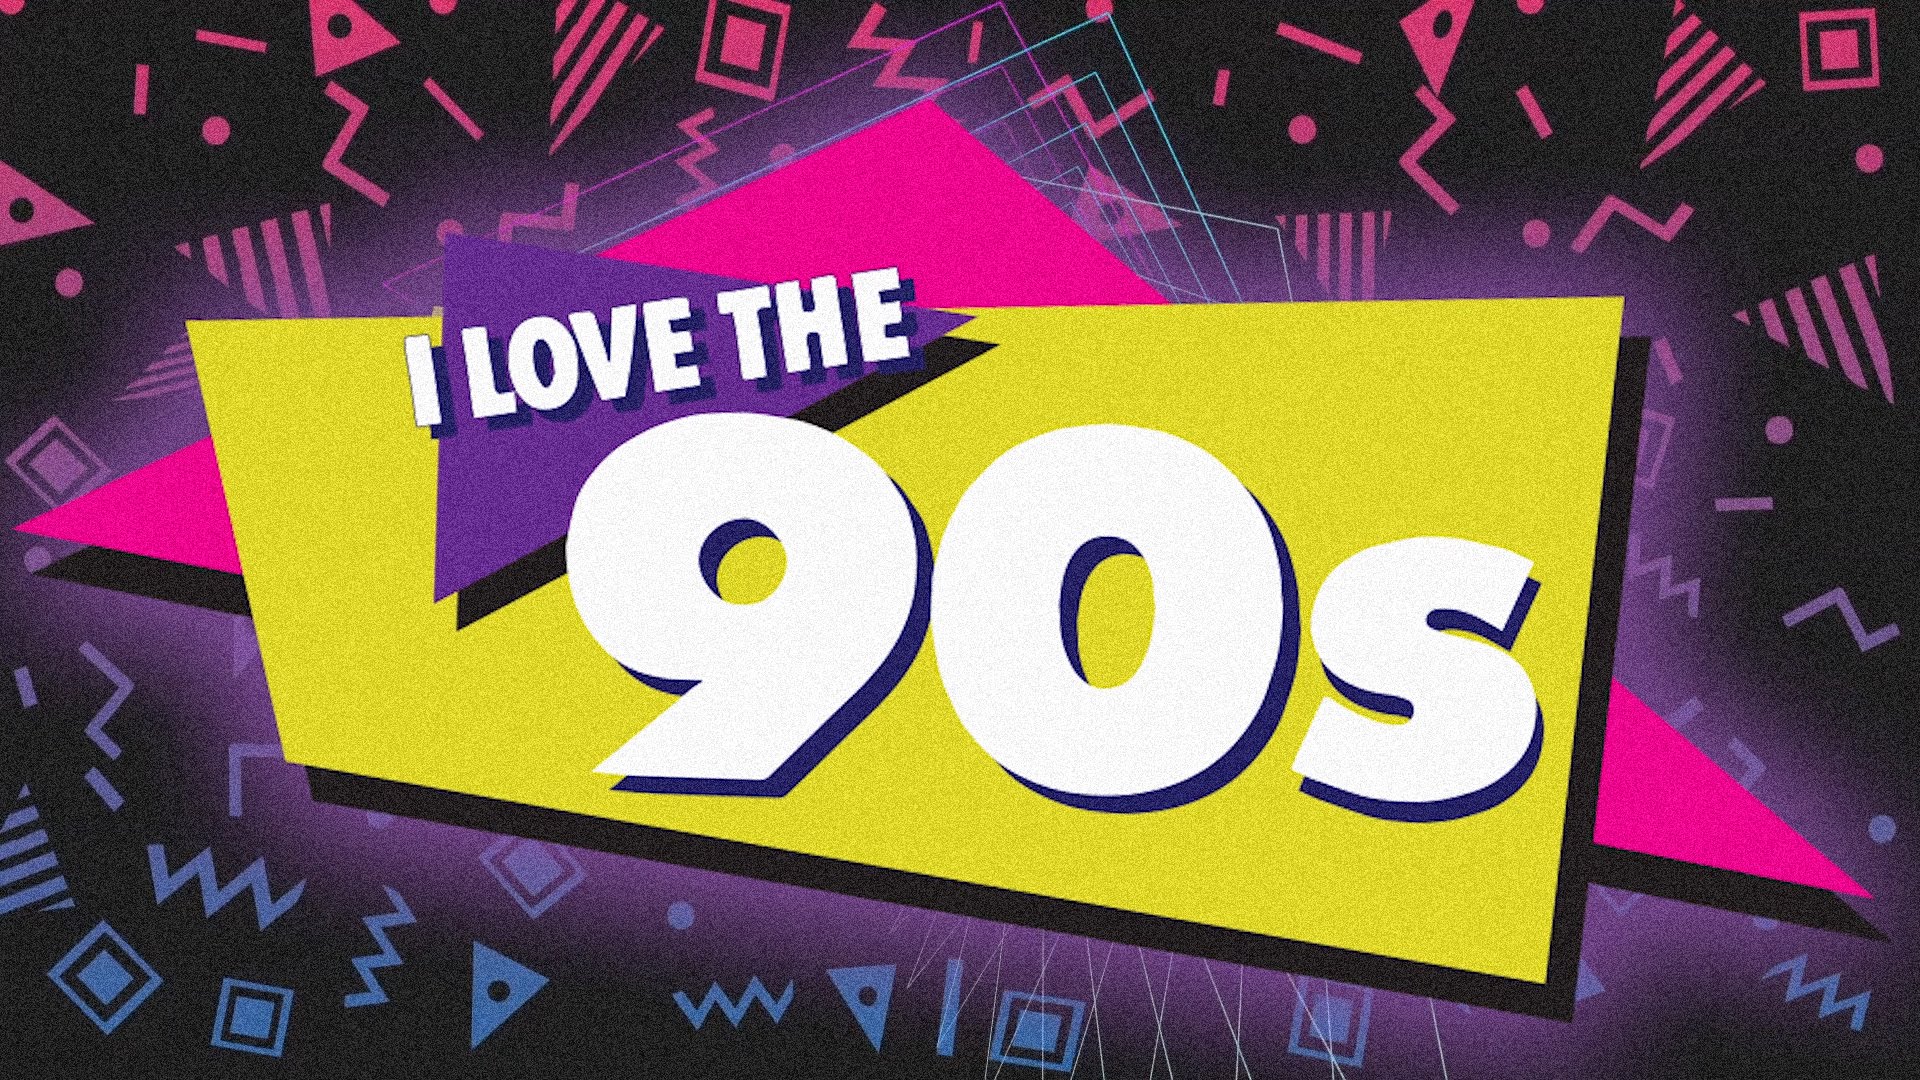 We love the 90s! WSGE